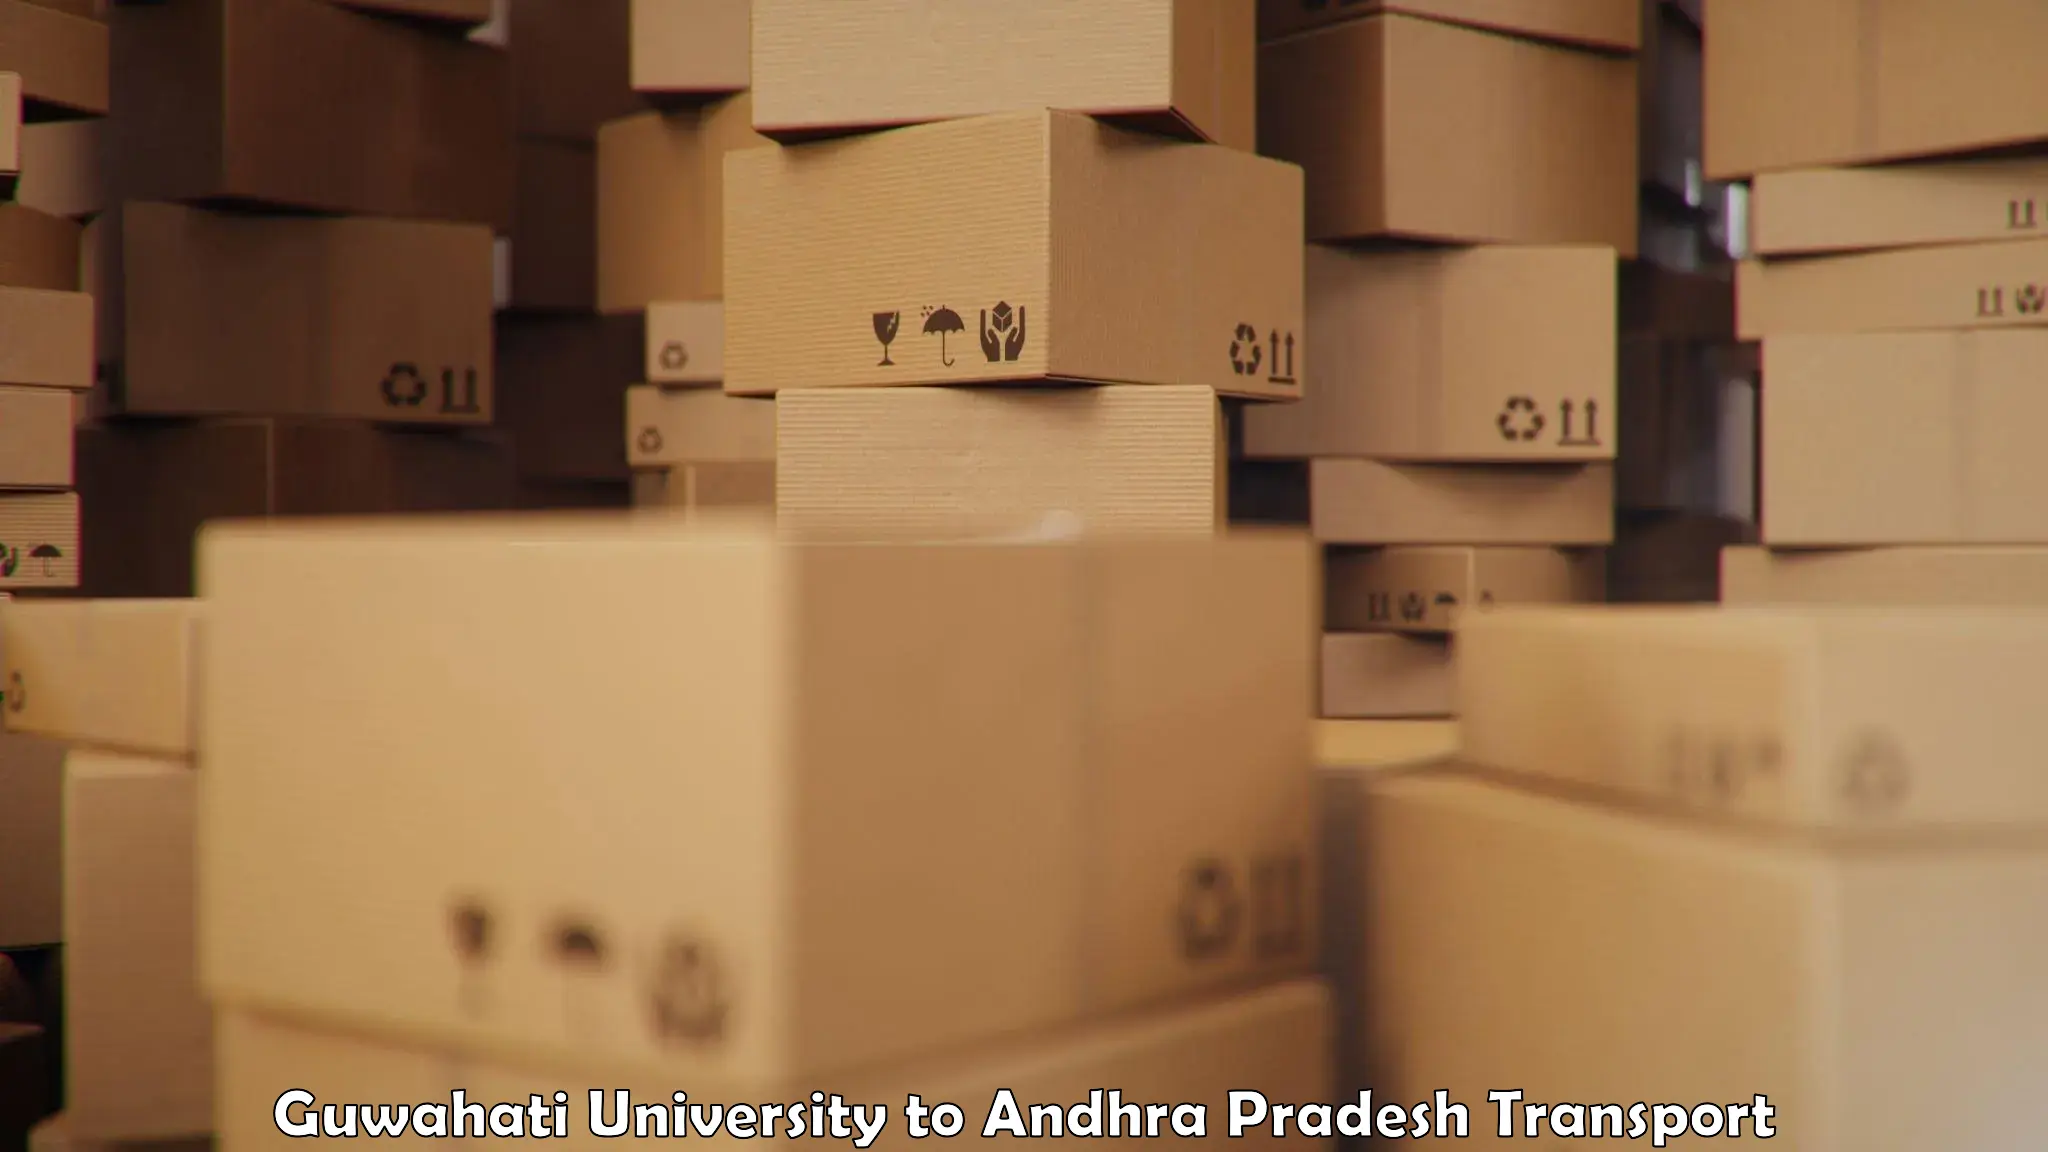 Container transportation services Guwahati University to Chandragiri